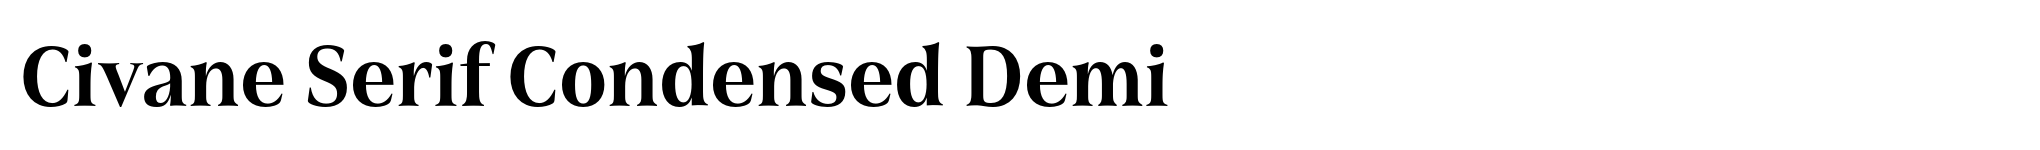 Civane Serif Condensed Demi image